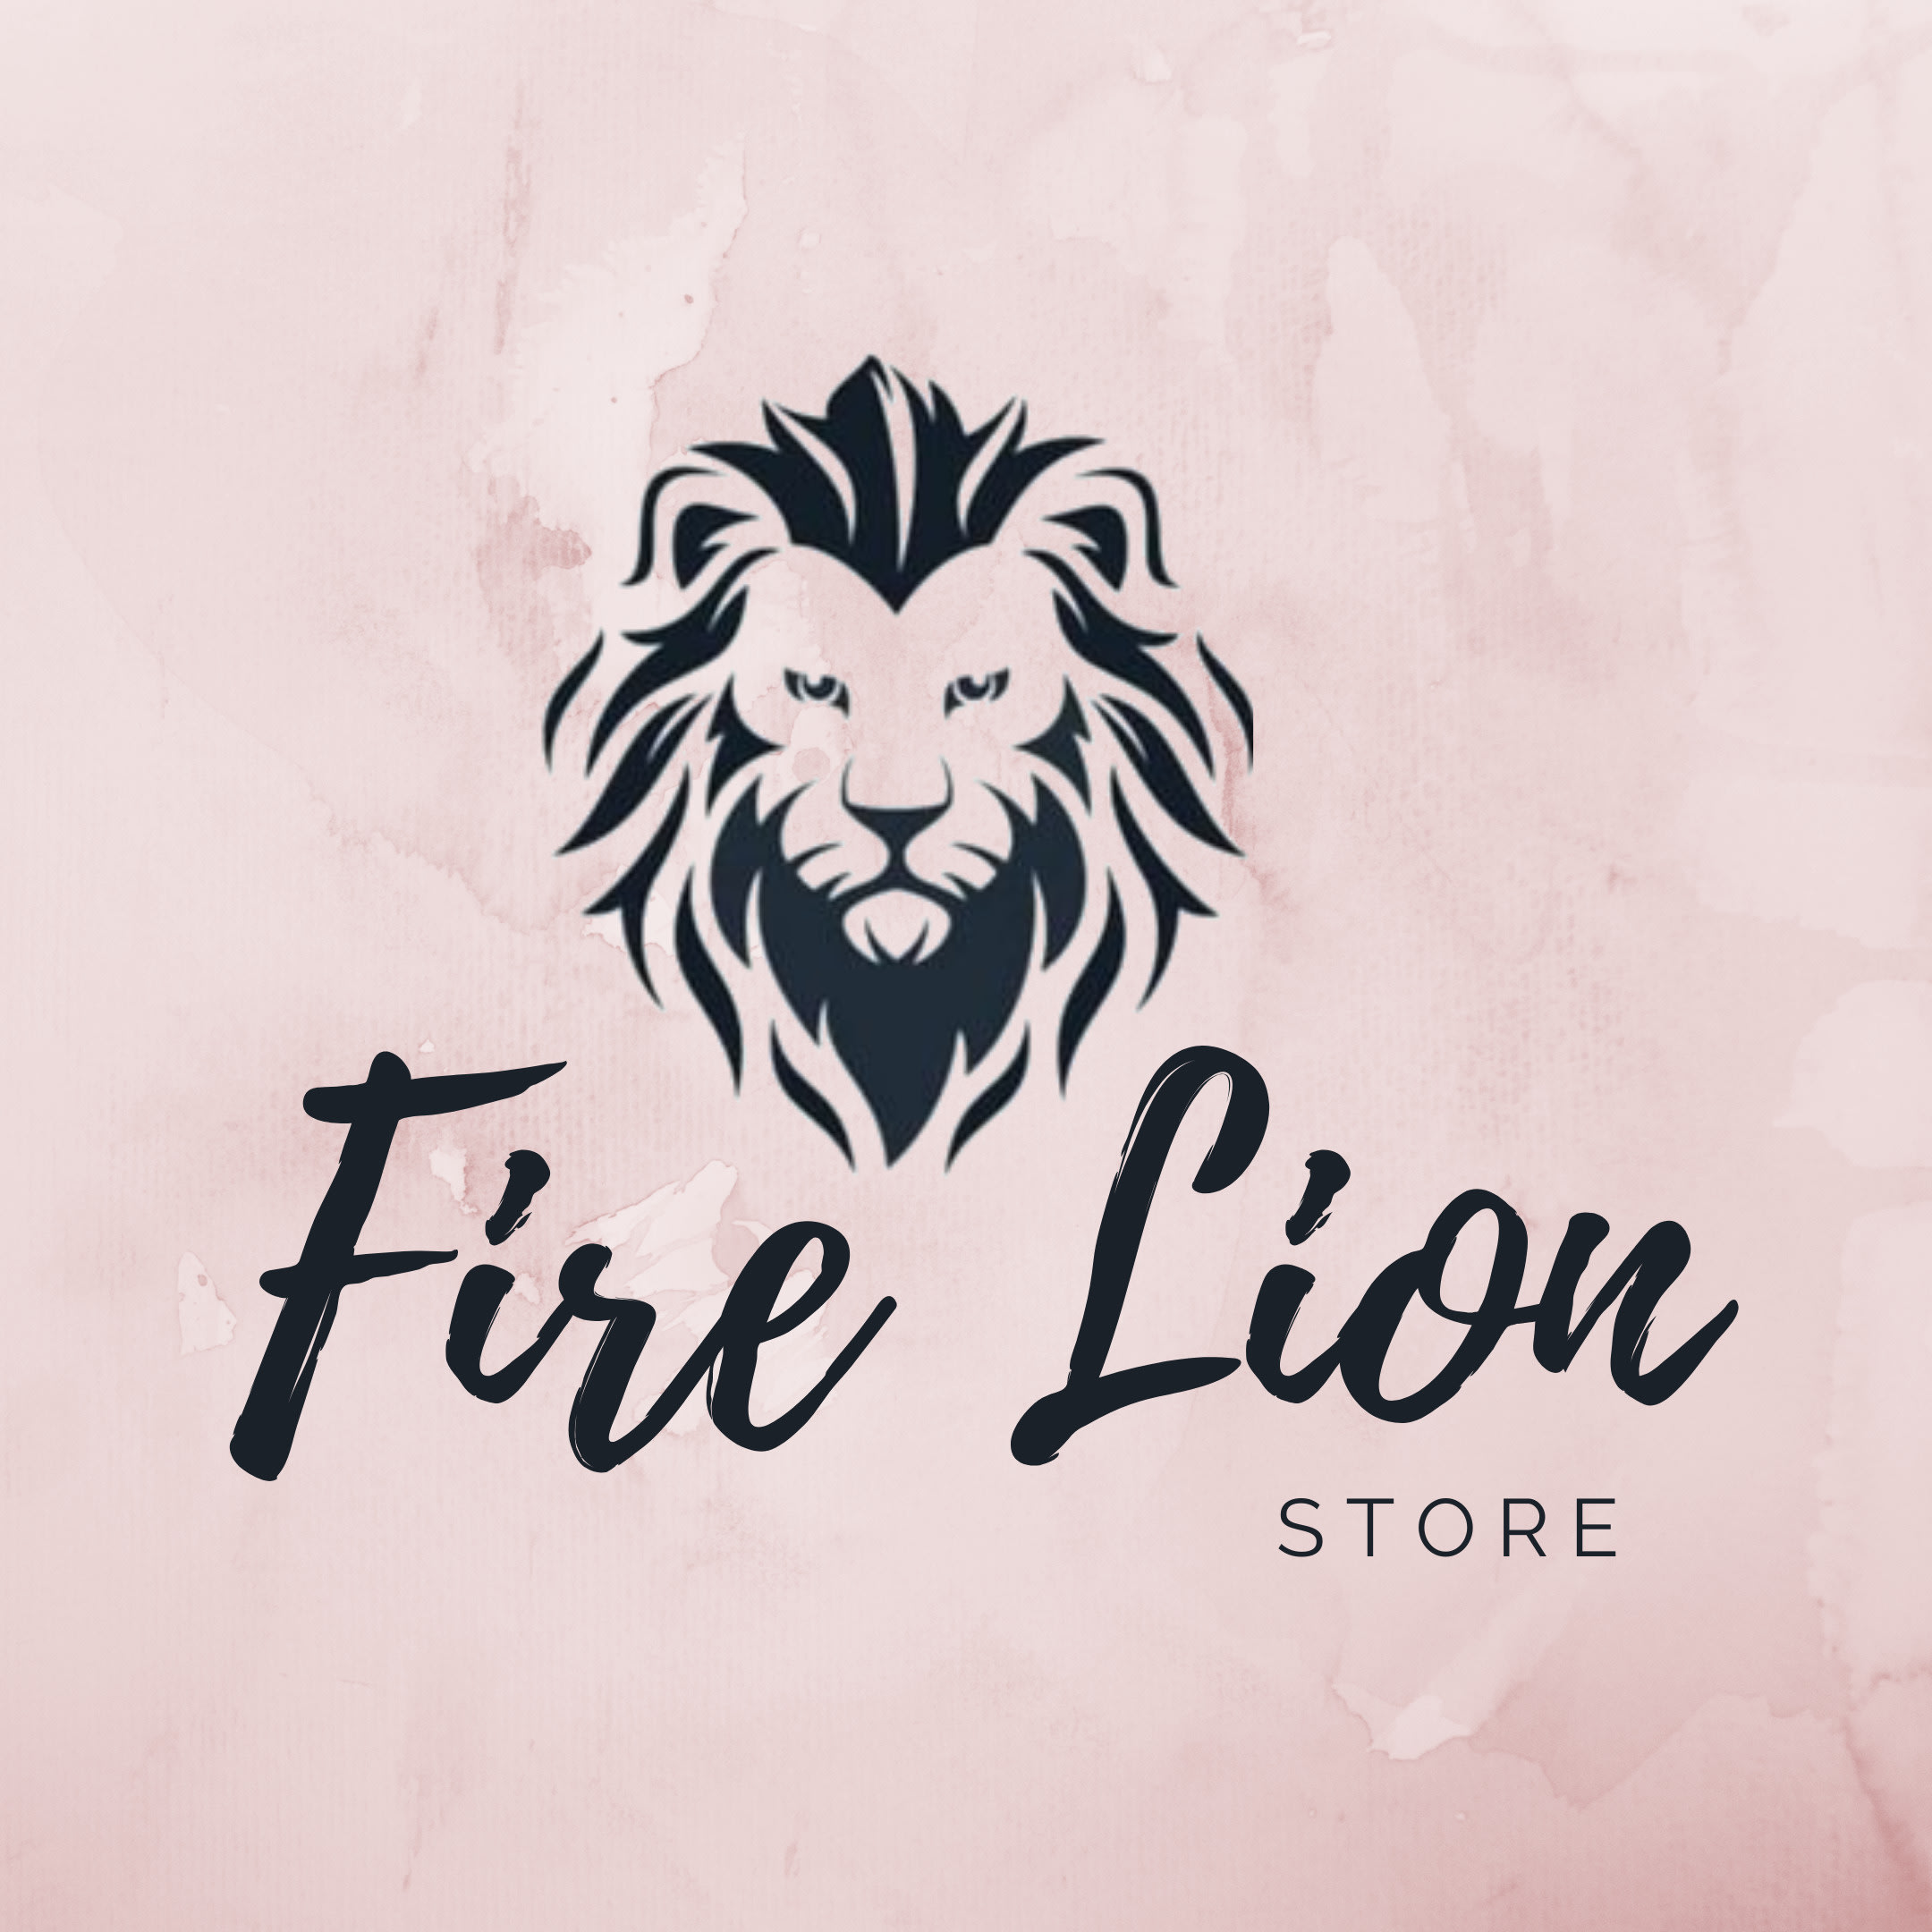 Fire Lion Store